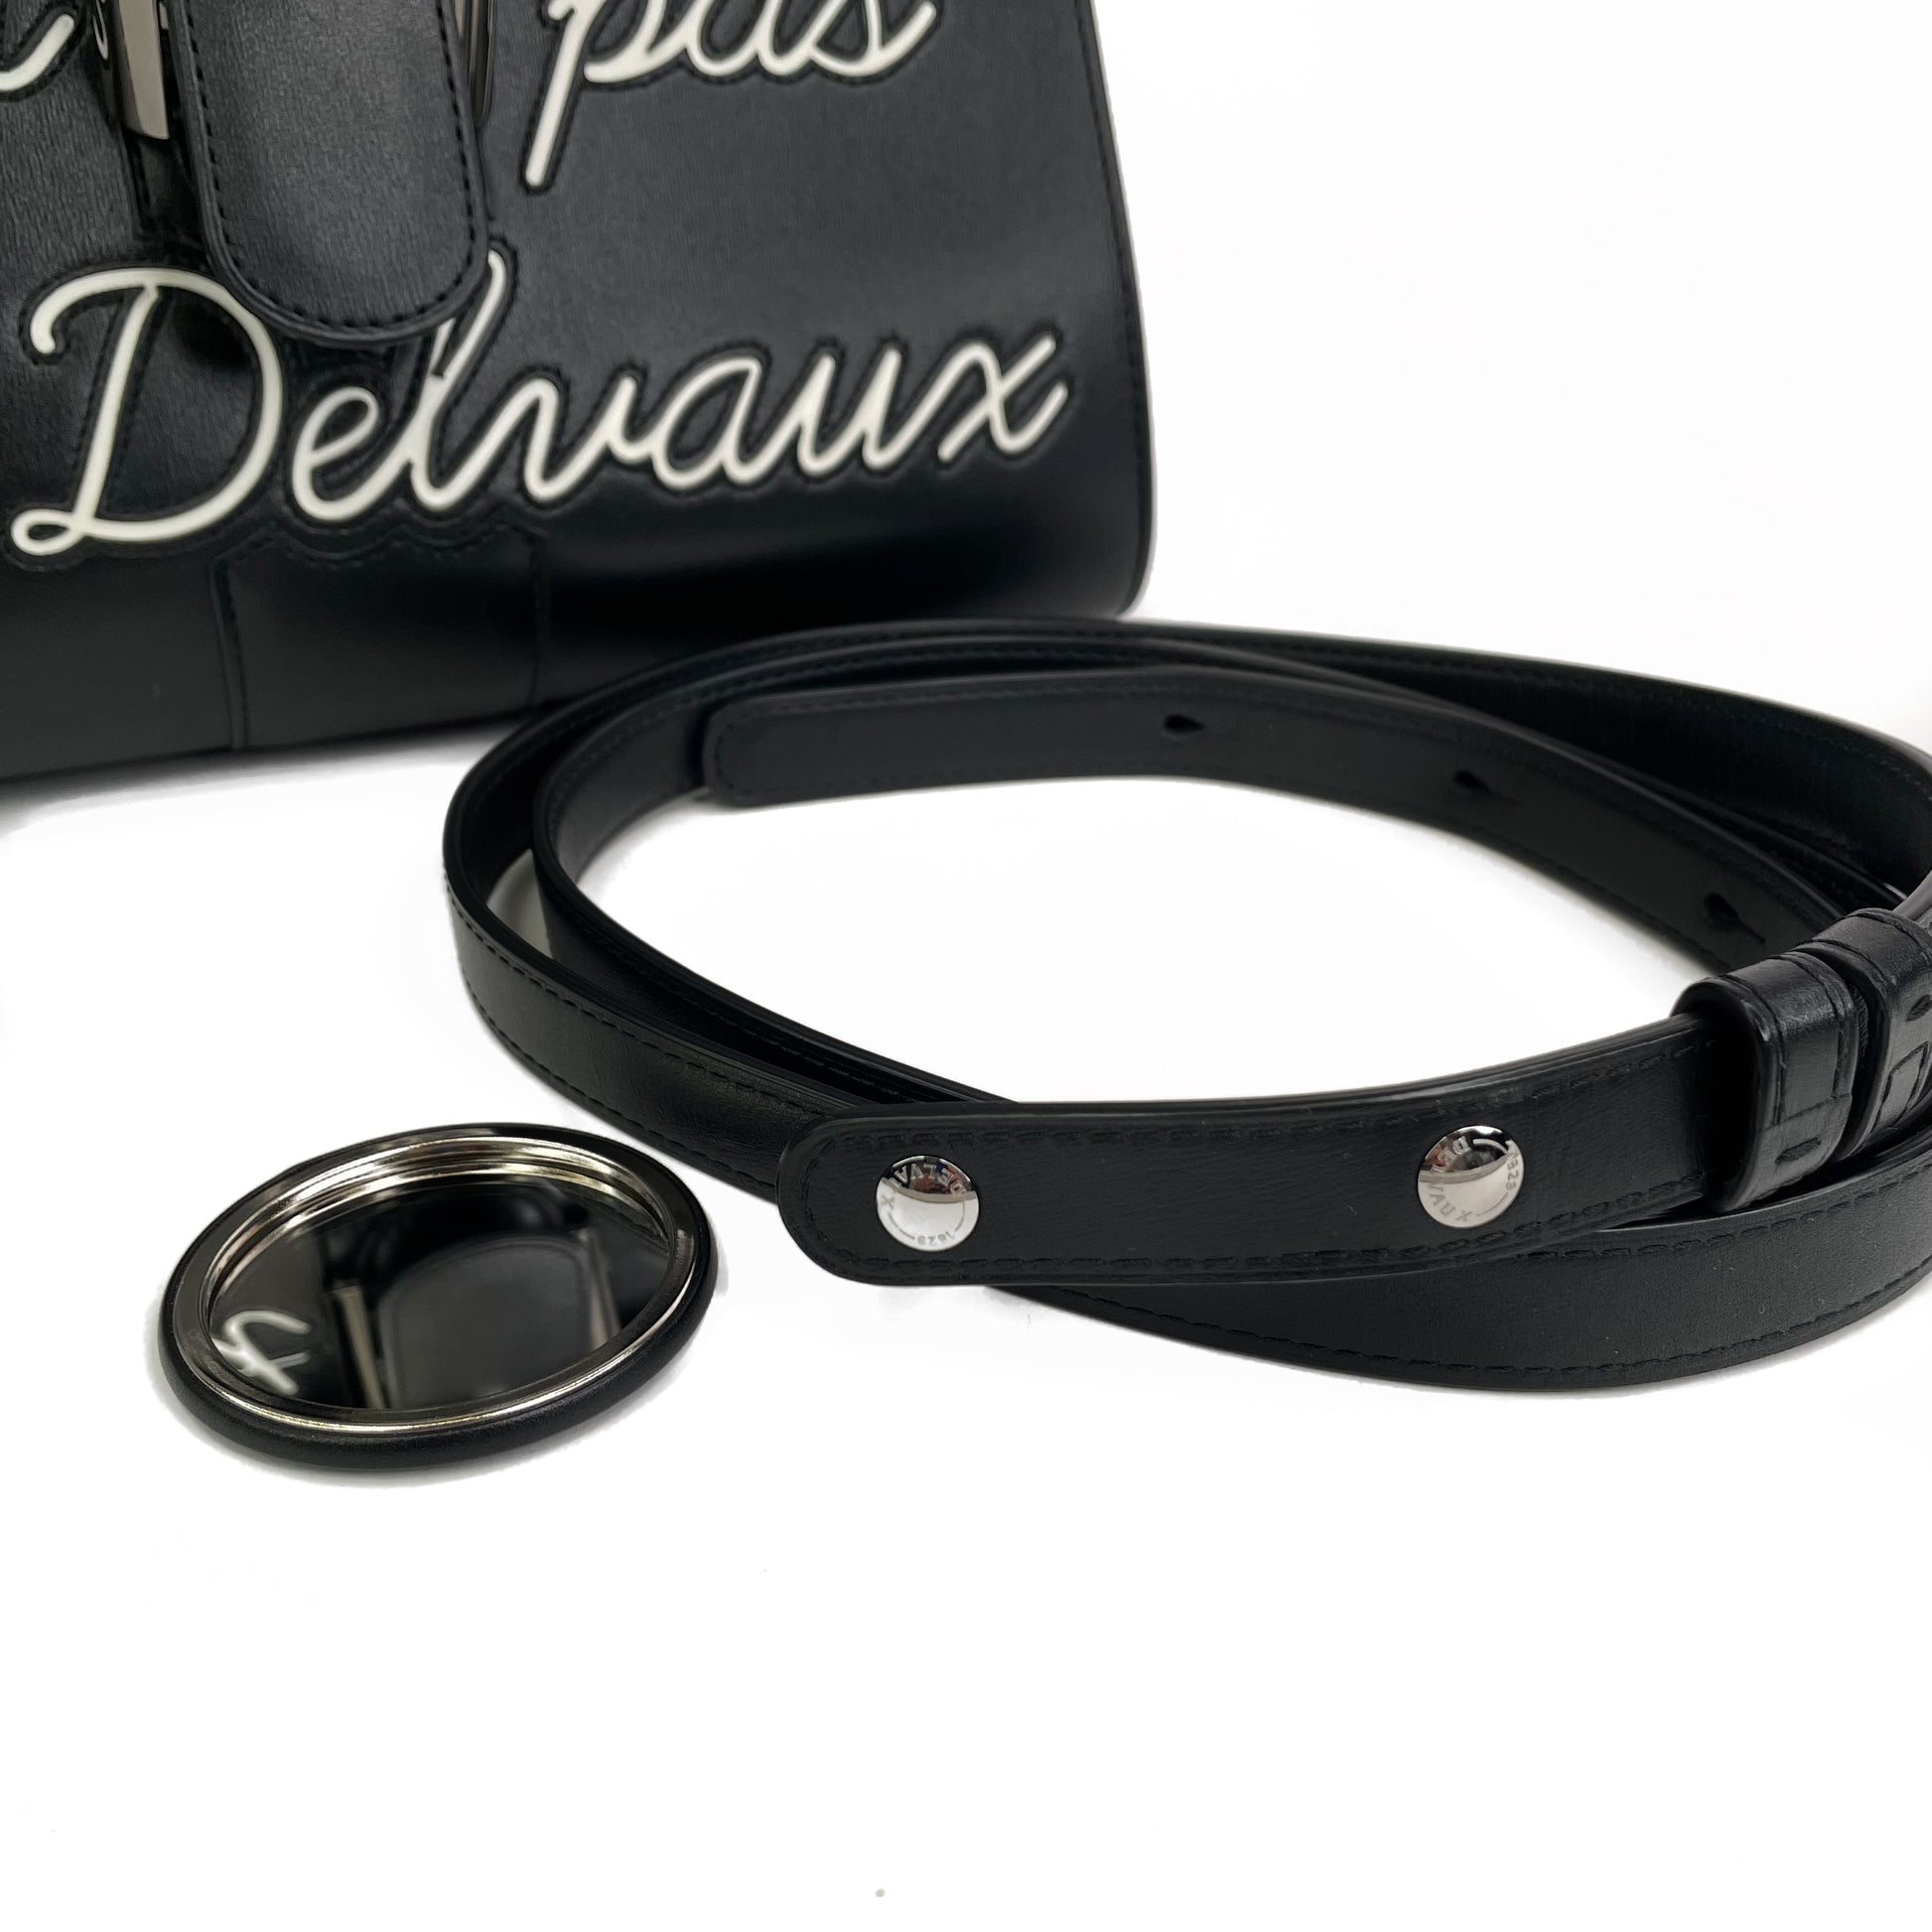 DELVAUX Dark Night / Tempête limited edition bag in…